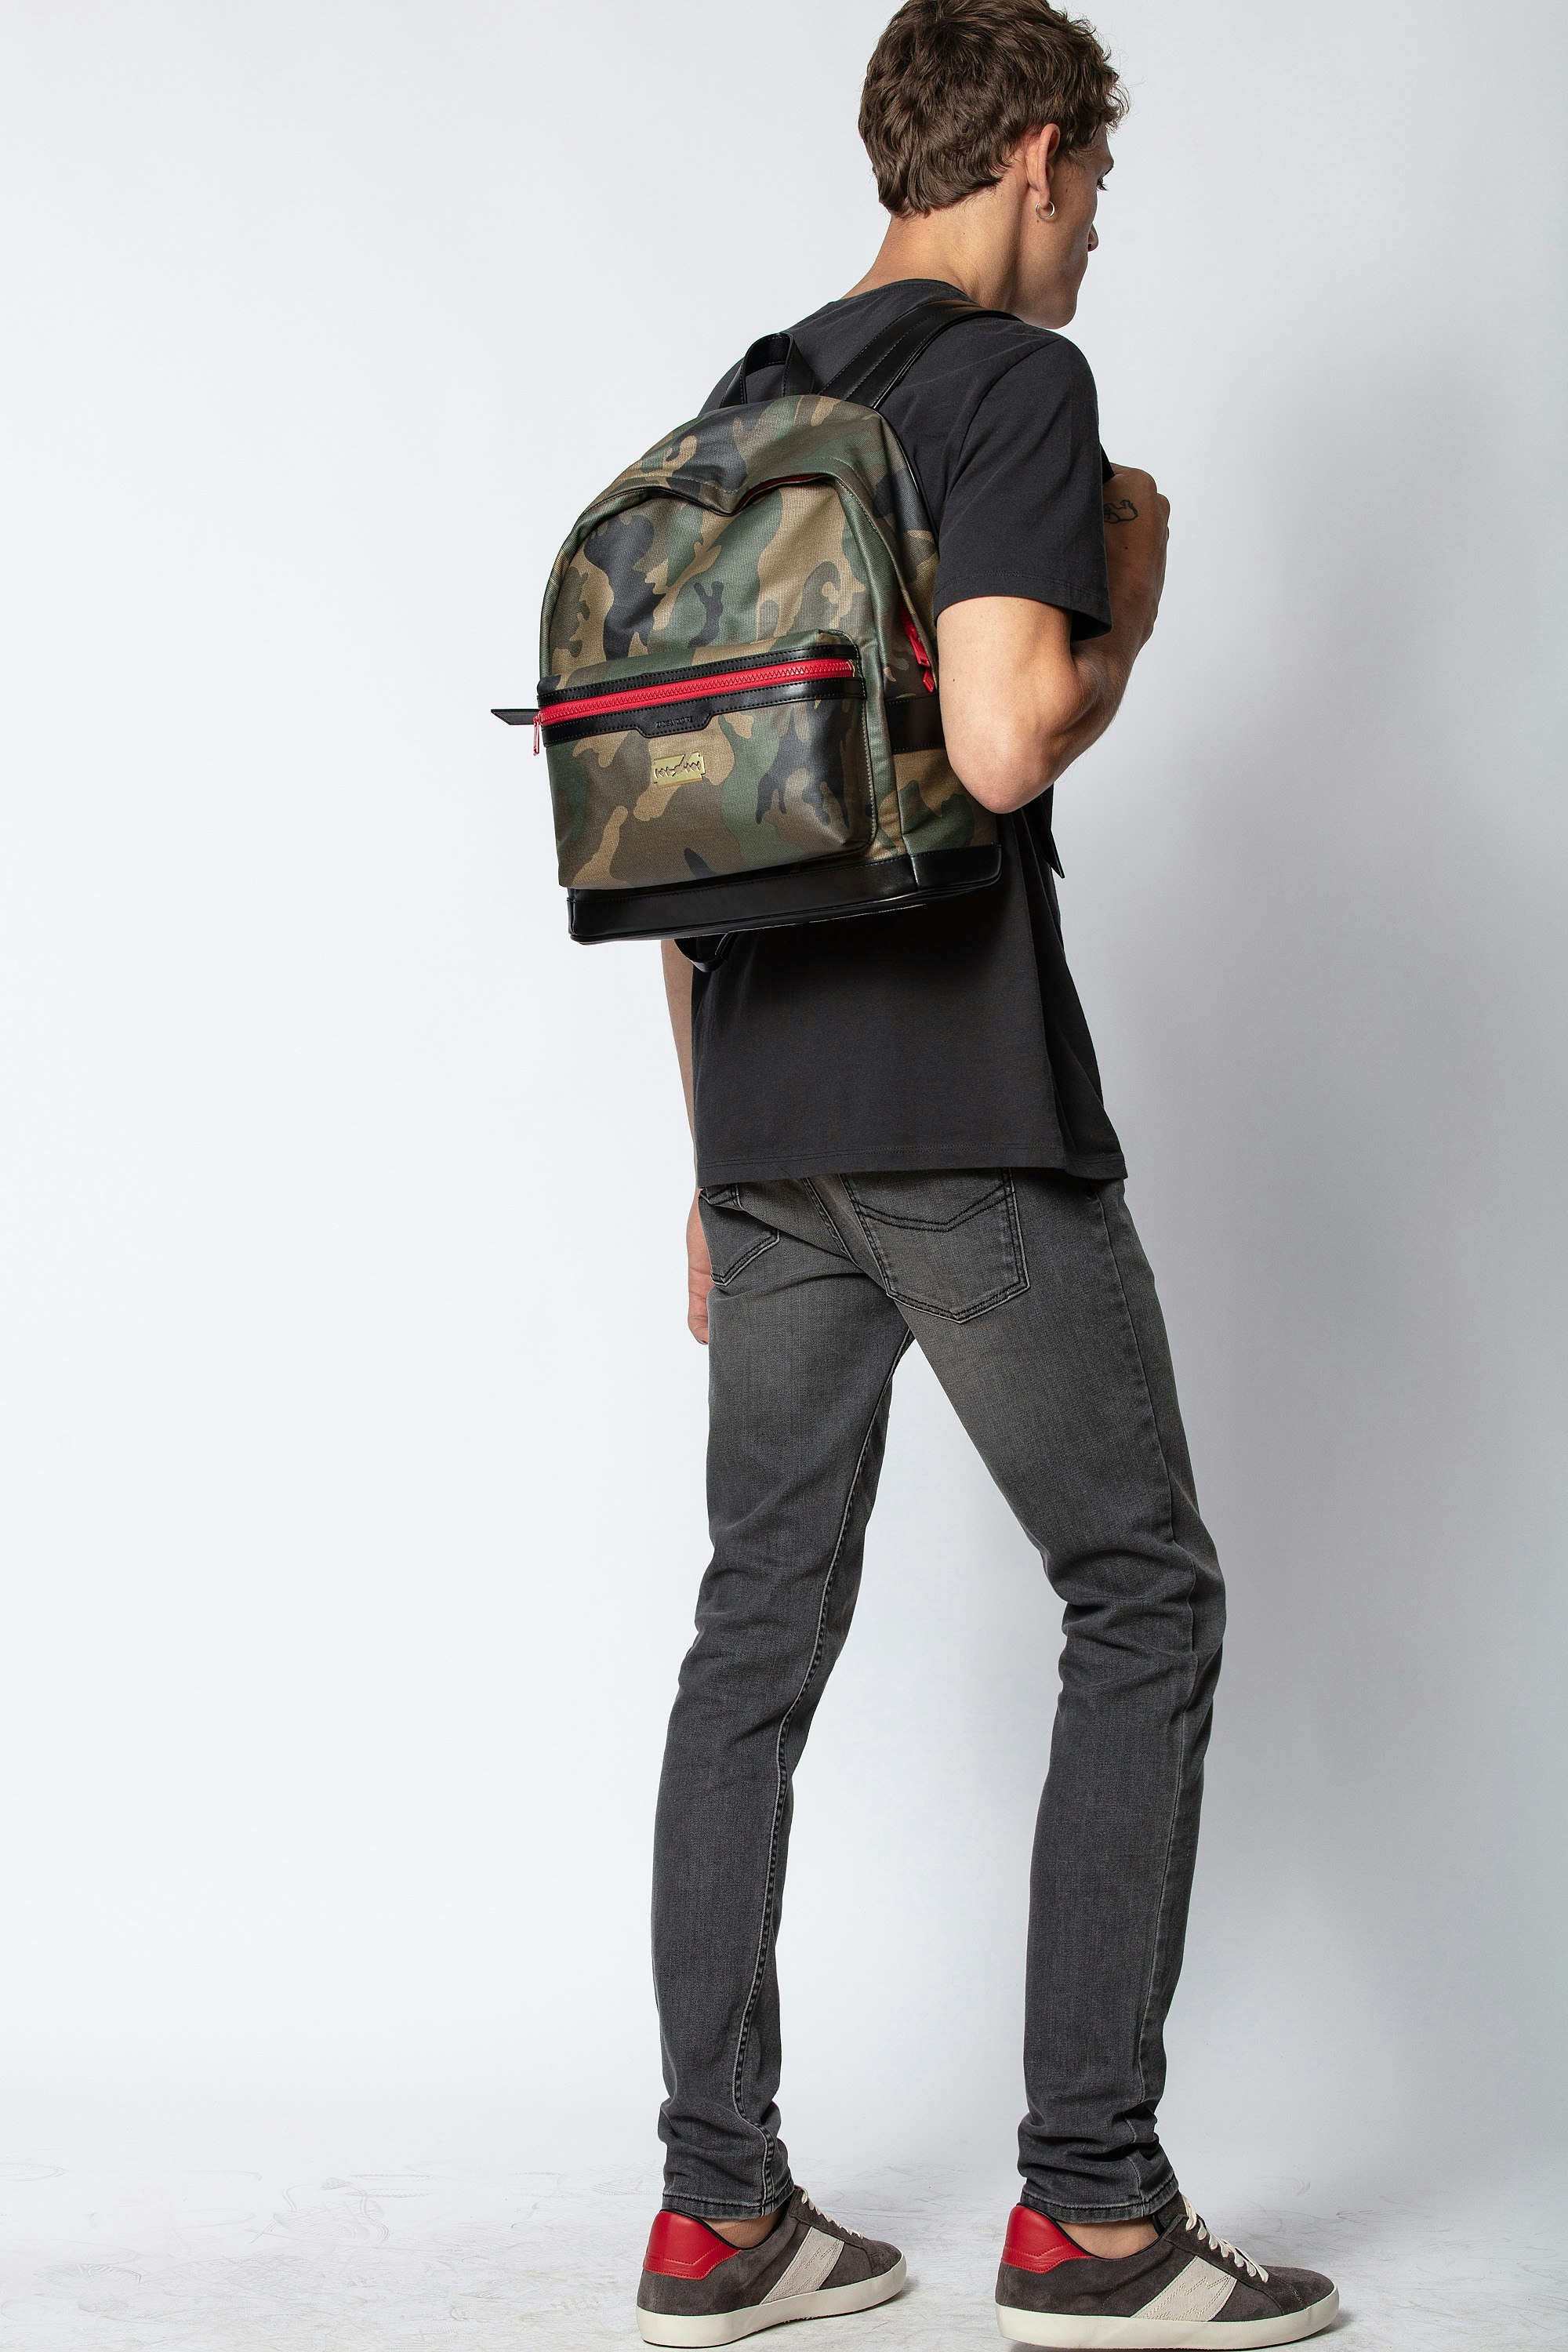 jordan camo backpack